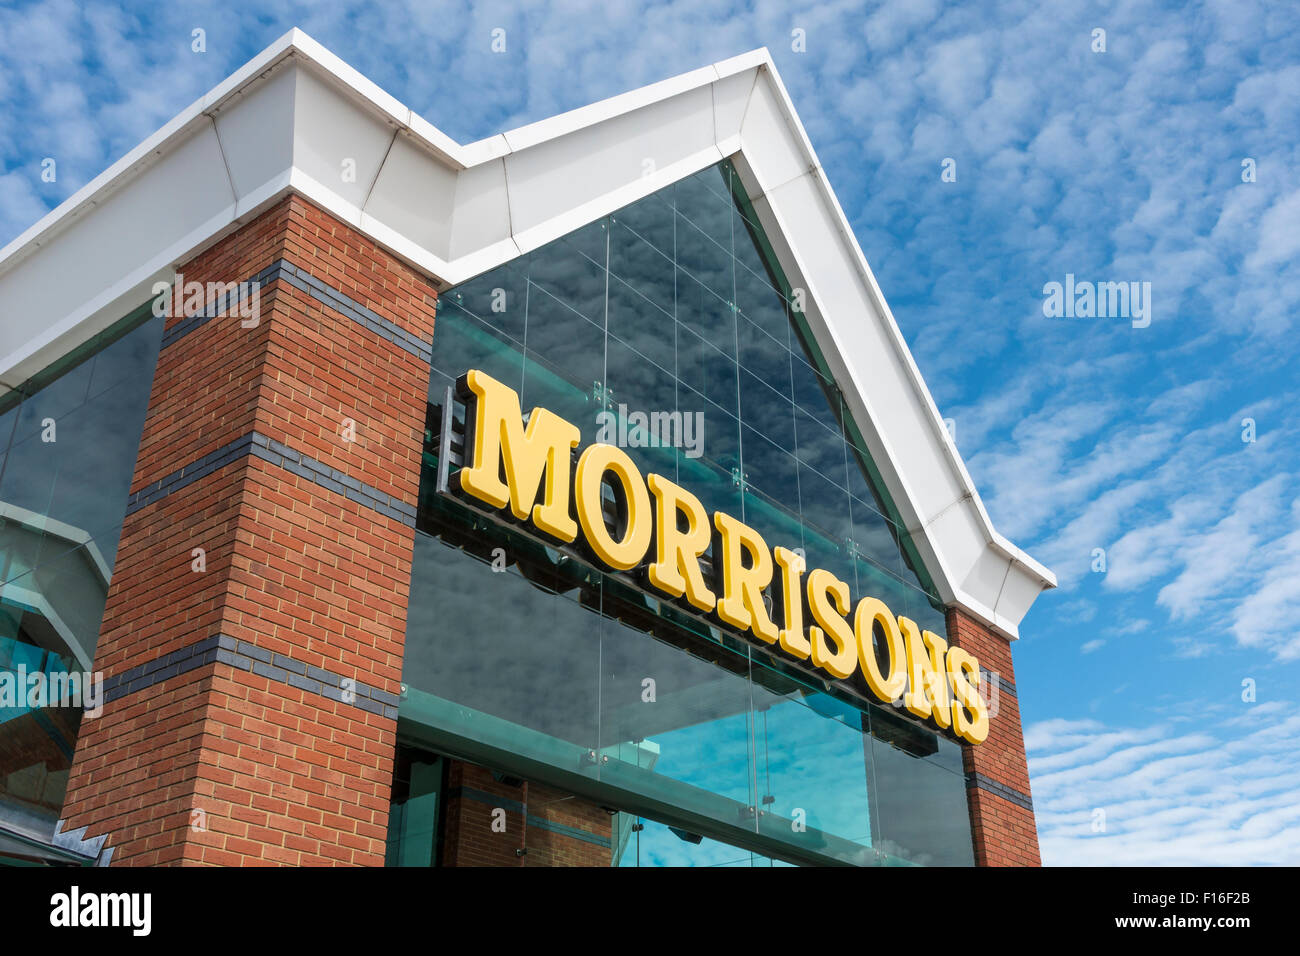 Morrisons Supermarkt Kette Logo Signage Schaufenster Stockfoto